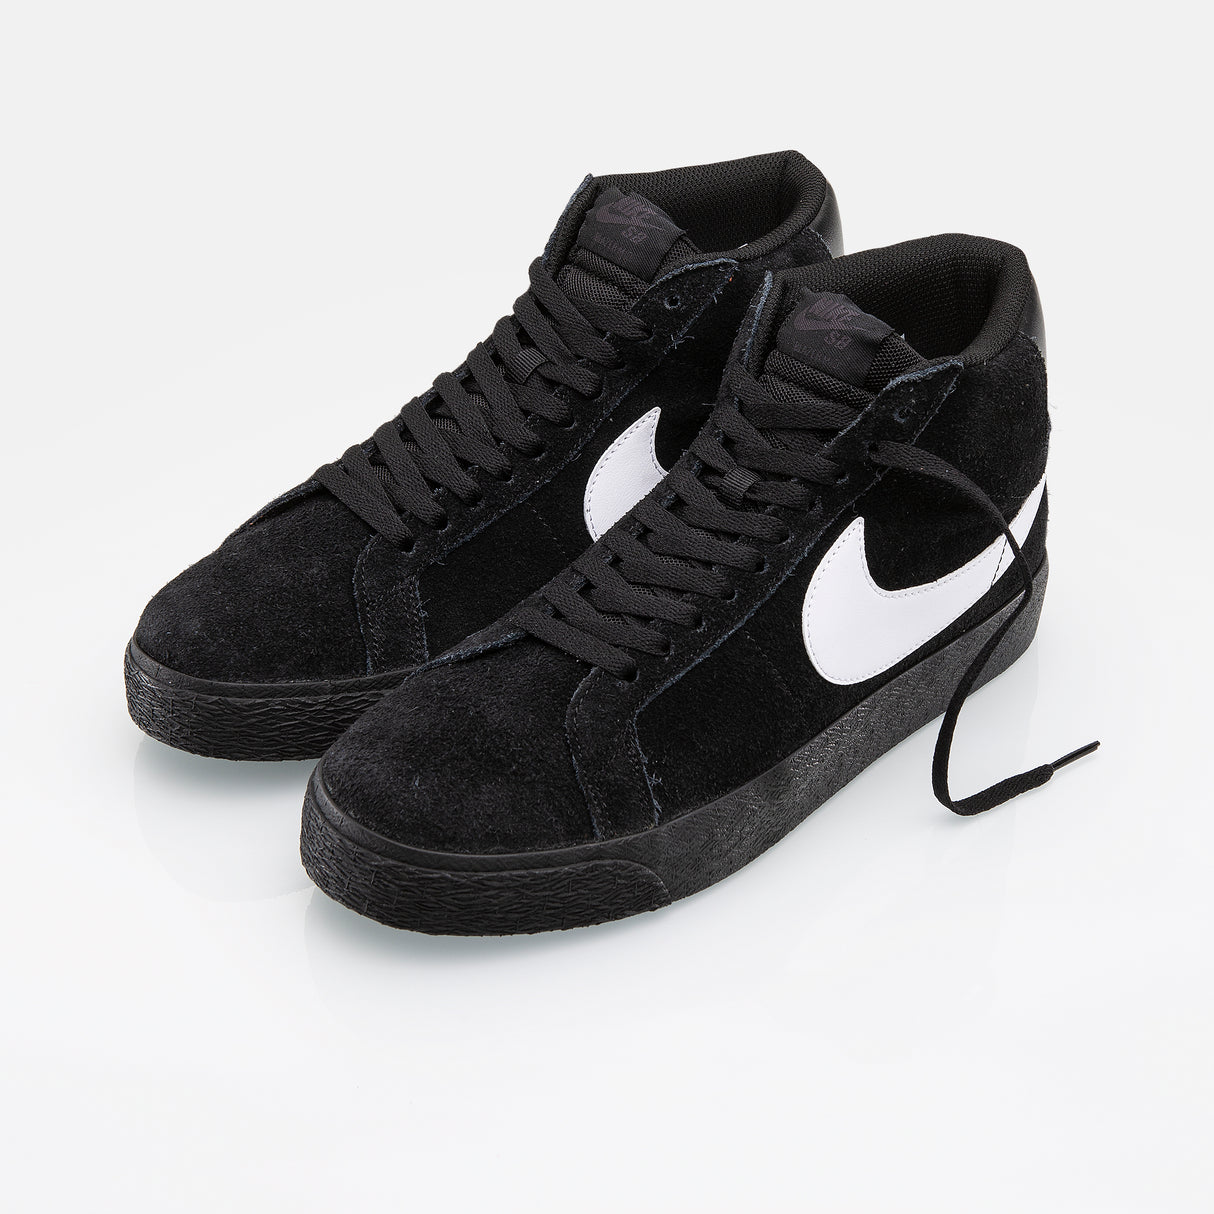 Nike SB Blazer Mid Zoom Black/Black/White Shoe